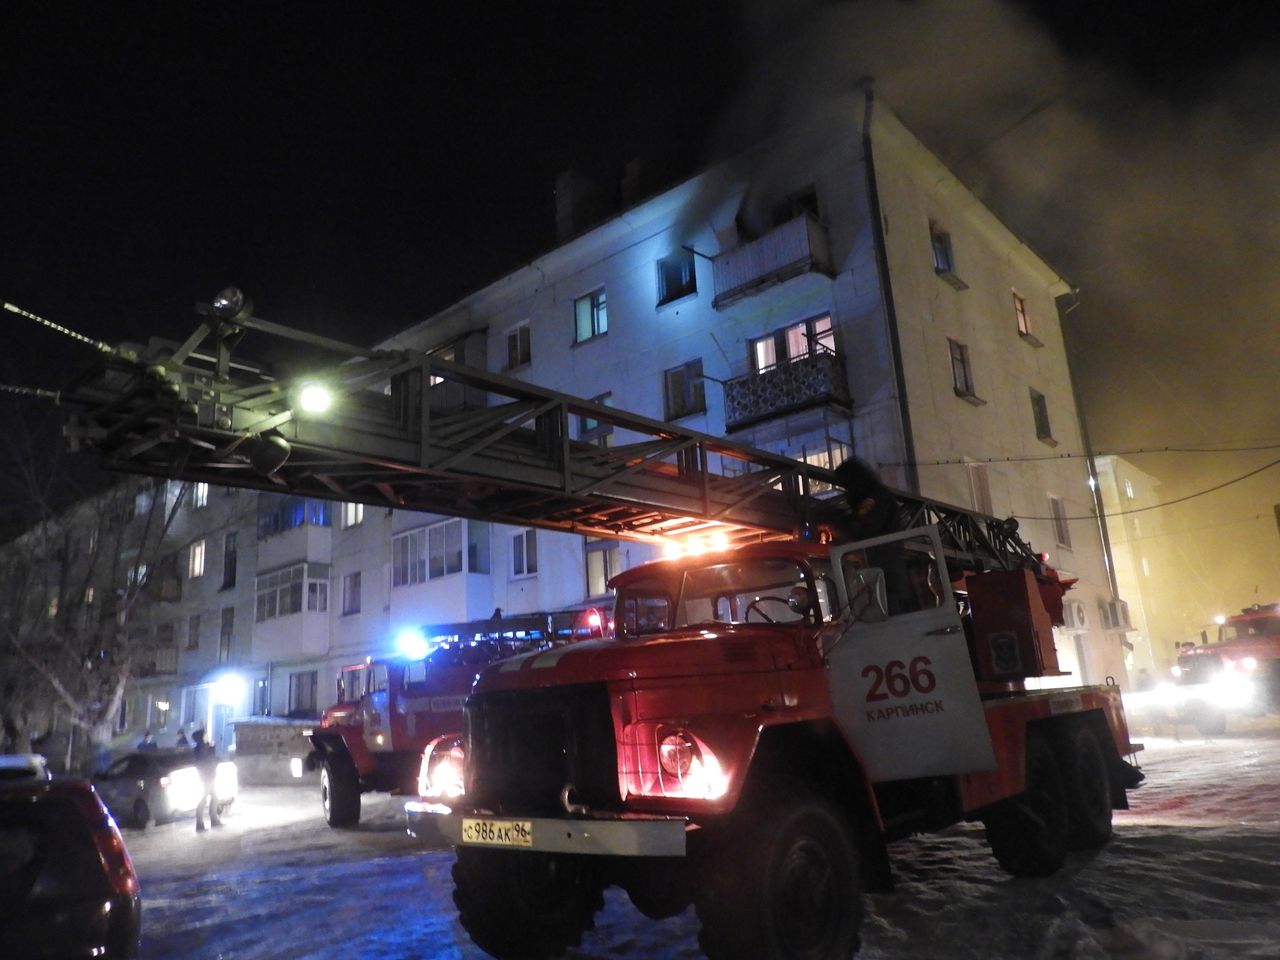 В центре Карпинска - пожар. Горит квартира на 4 этаже